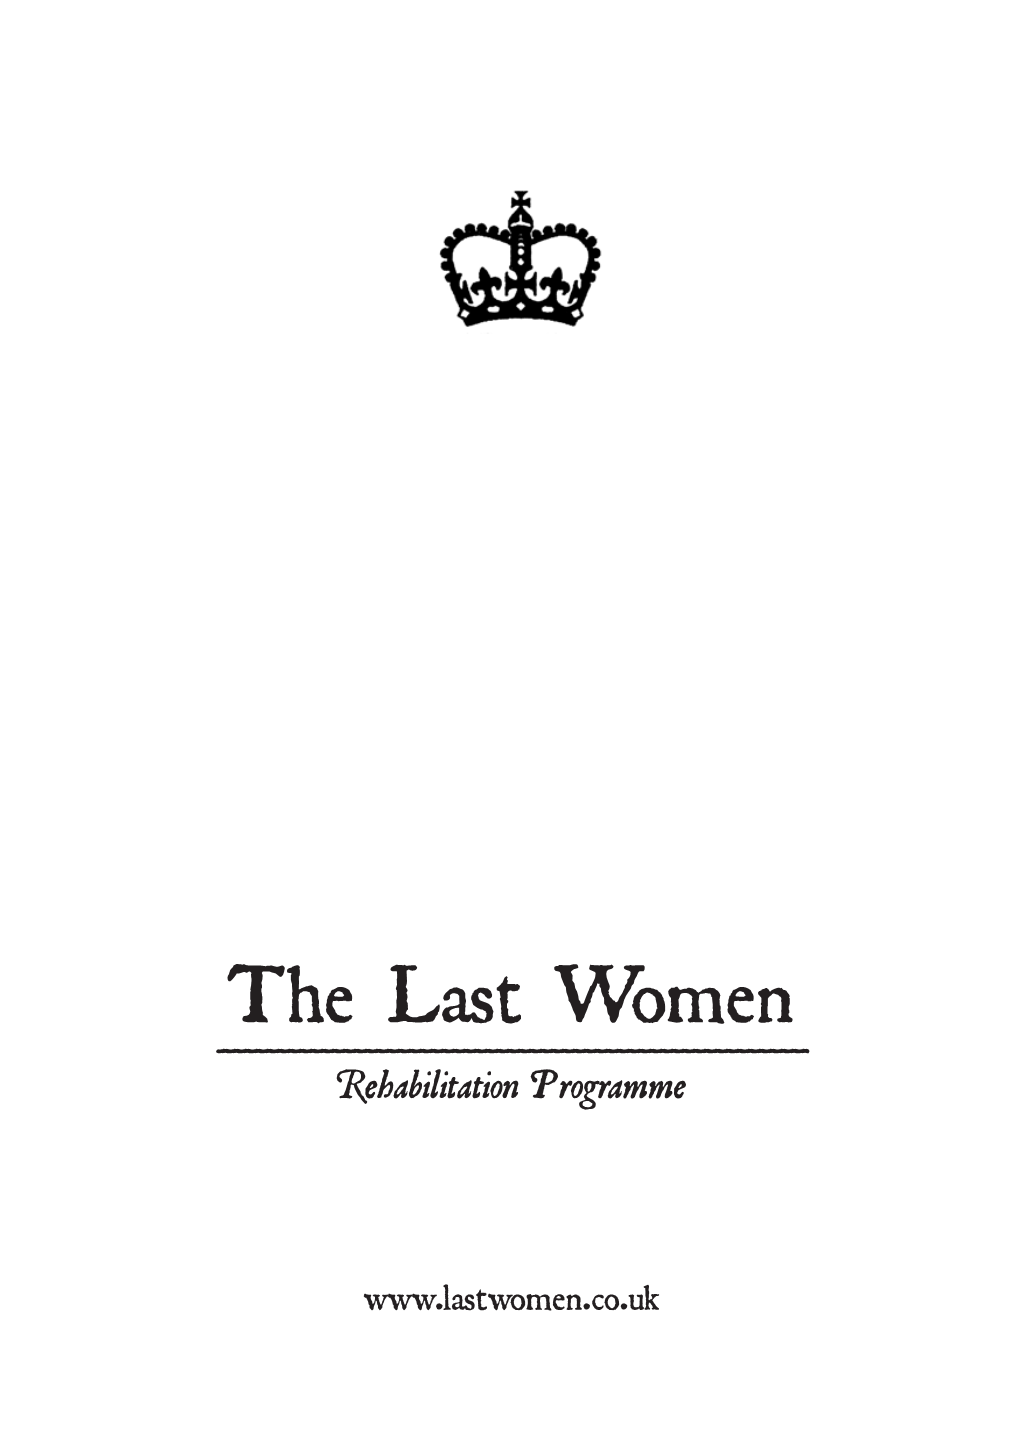 Last-Women-Programme.Qxd:Layout 1 16/4/09 14:49 Page 1